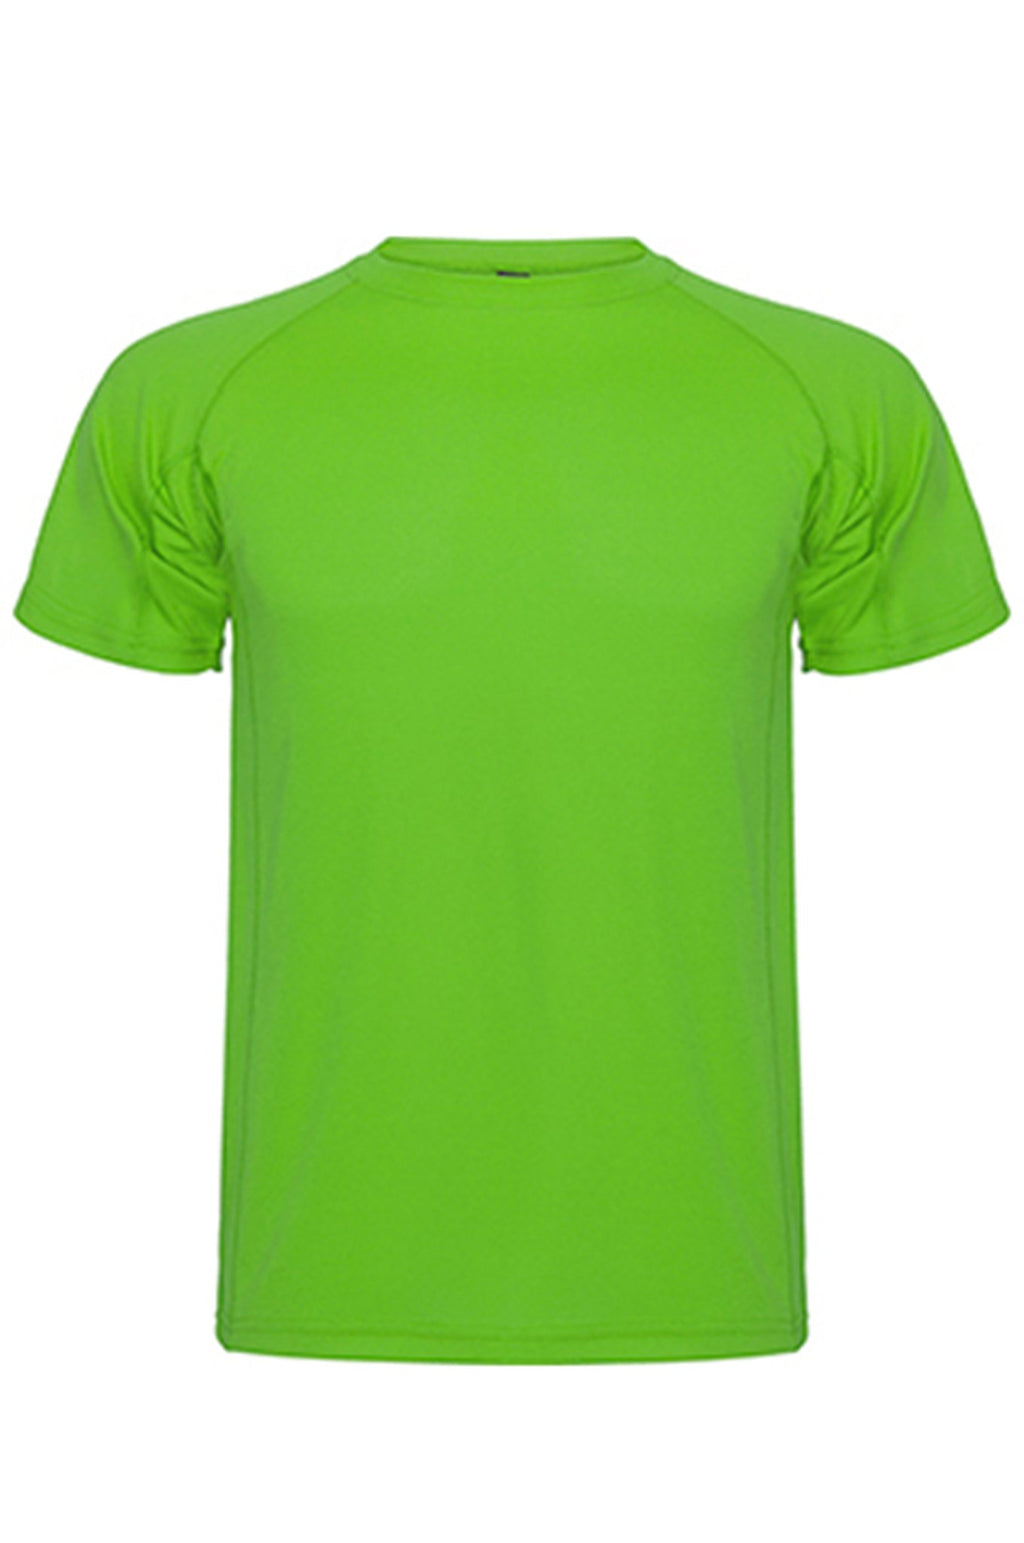 Training T -shirt - Green